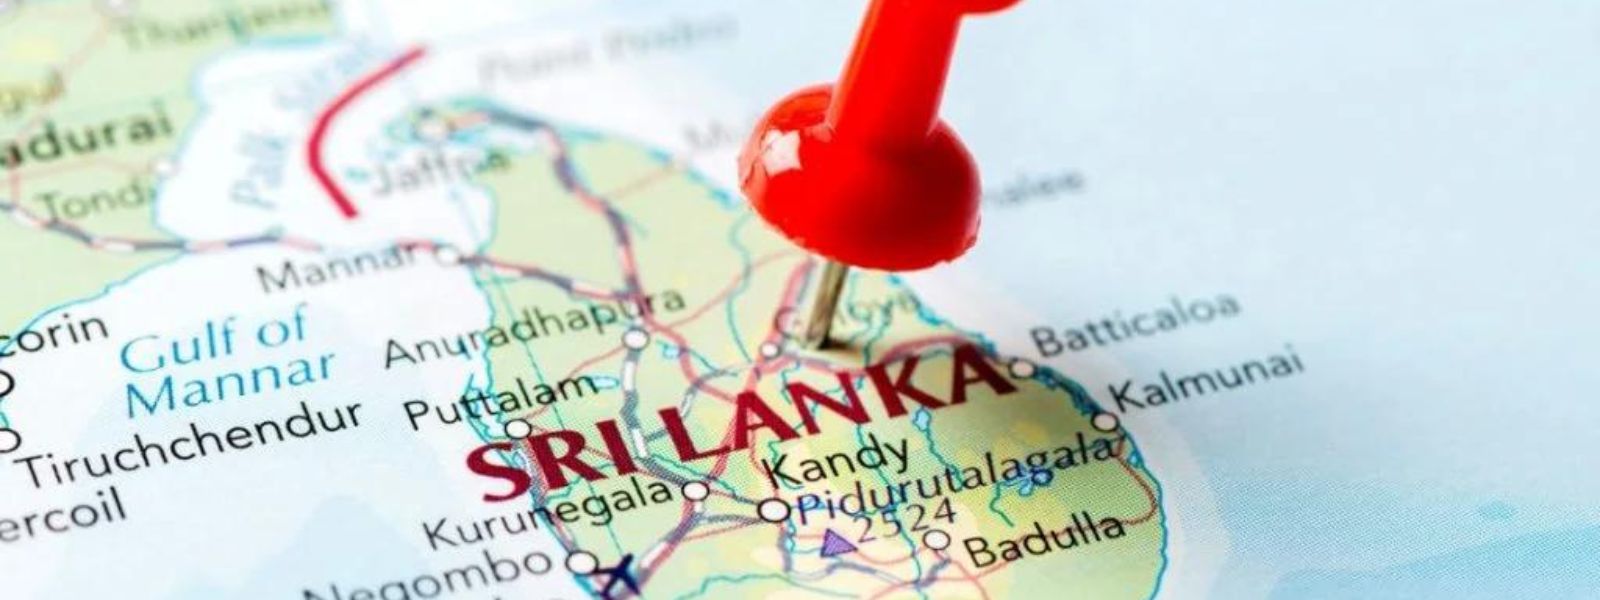 Sri Lanka’s Strategic Autonomy plays out